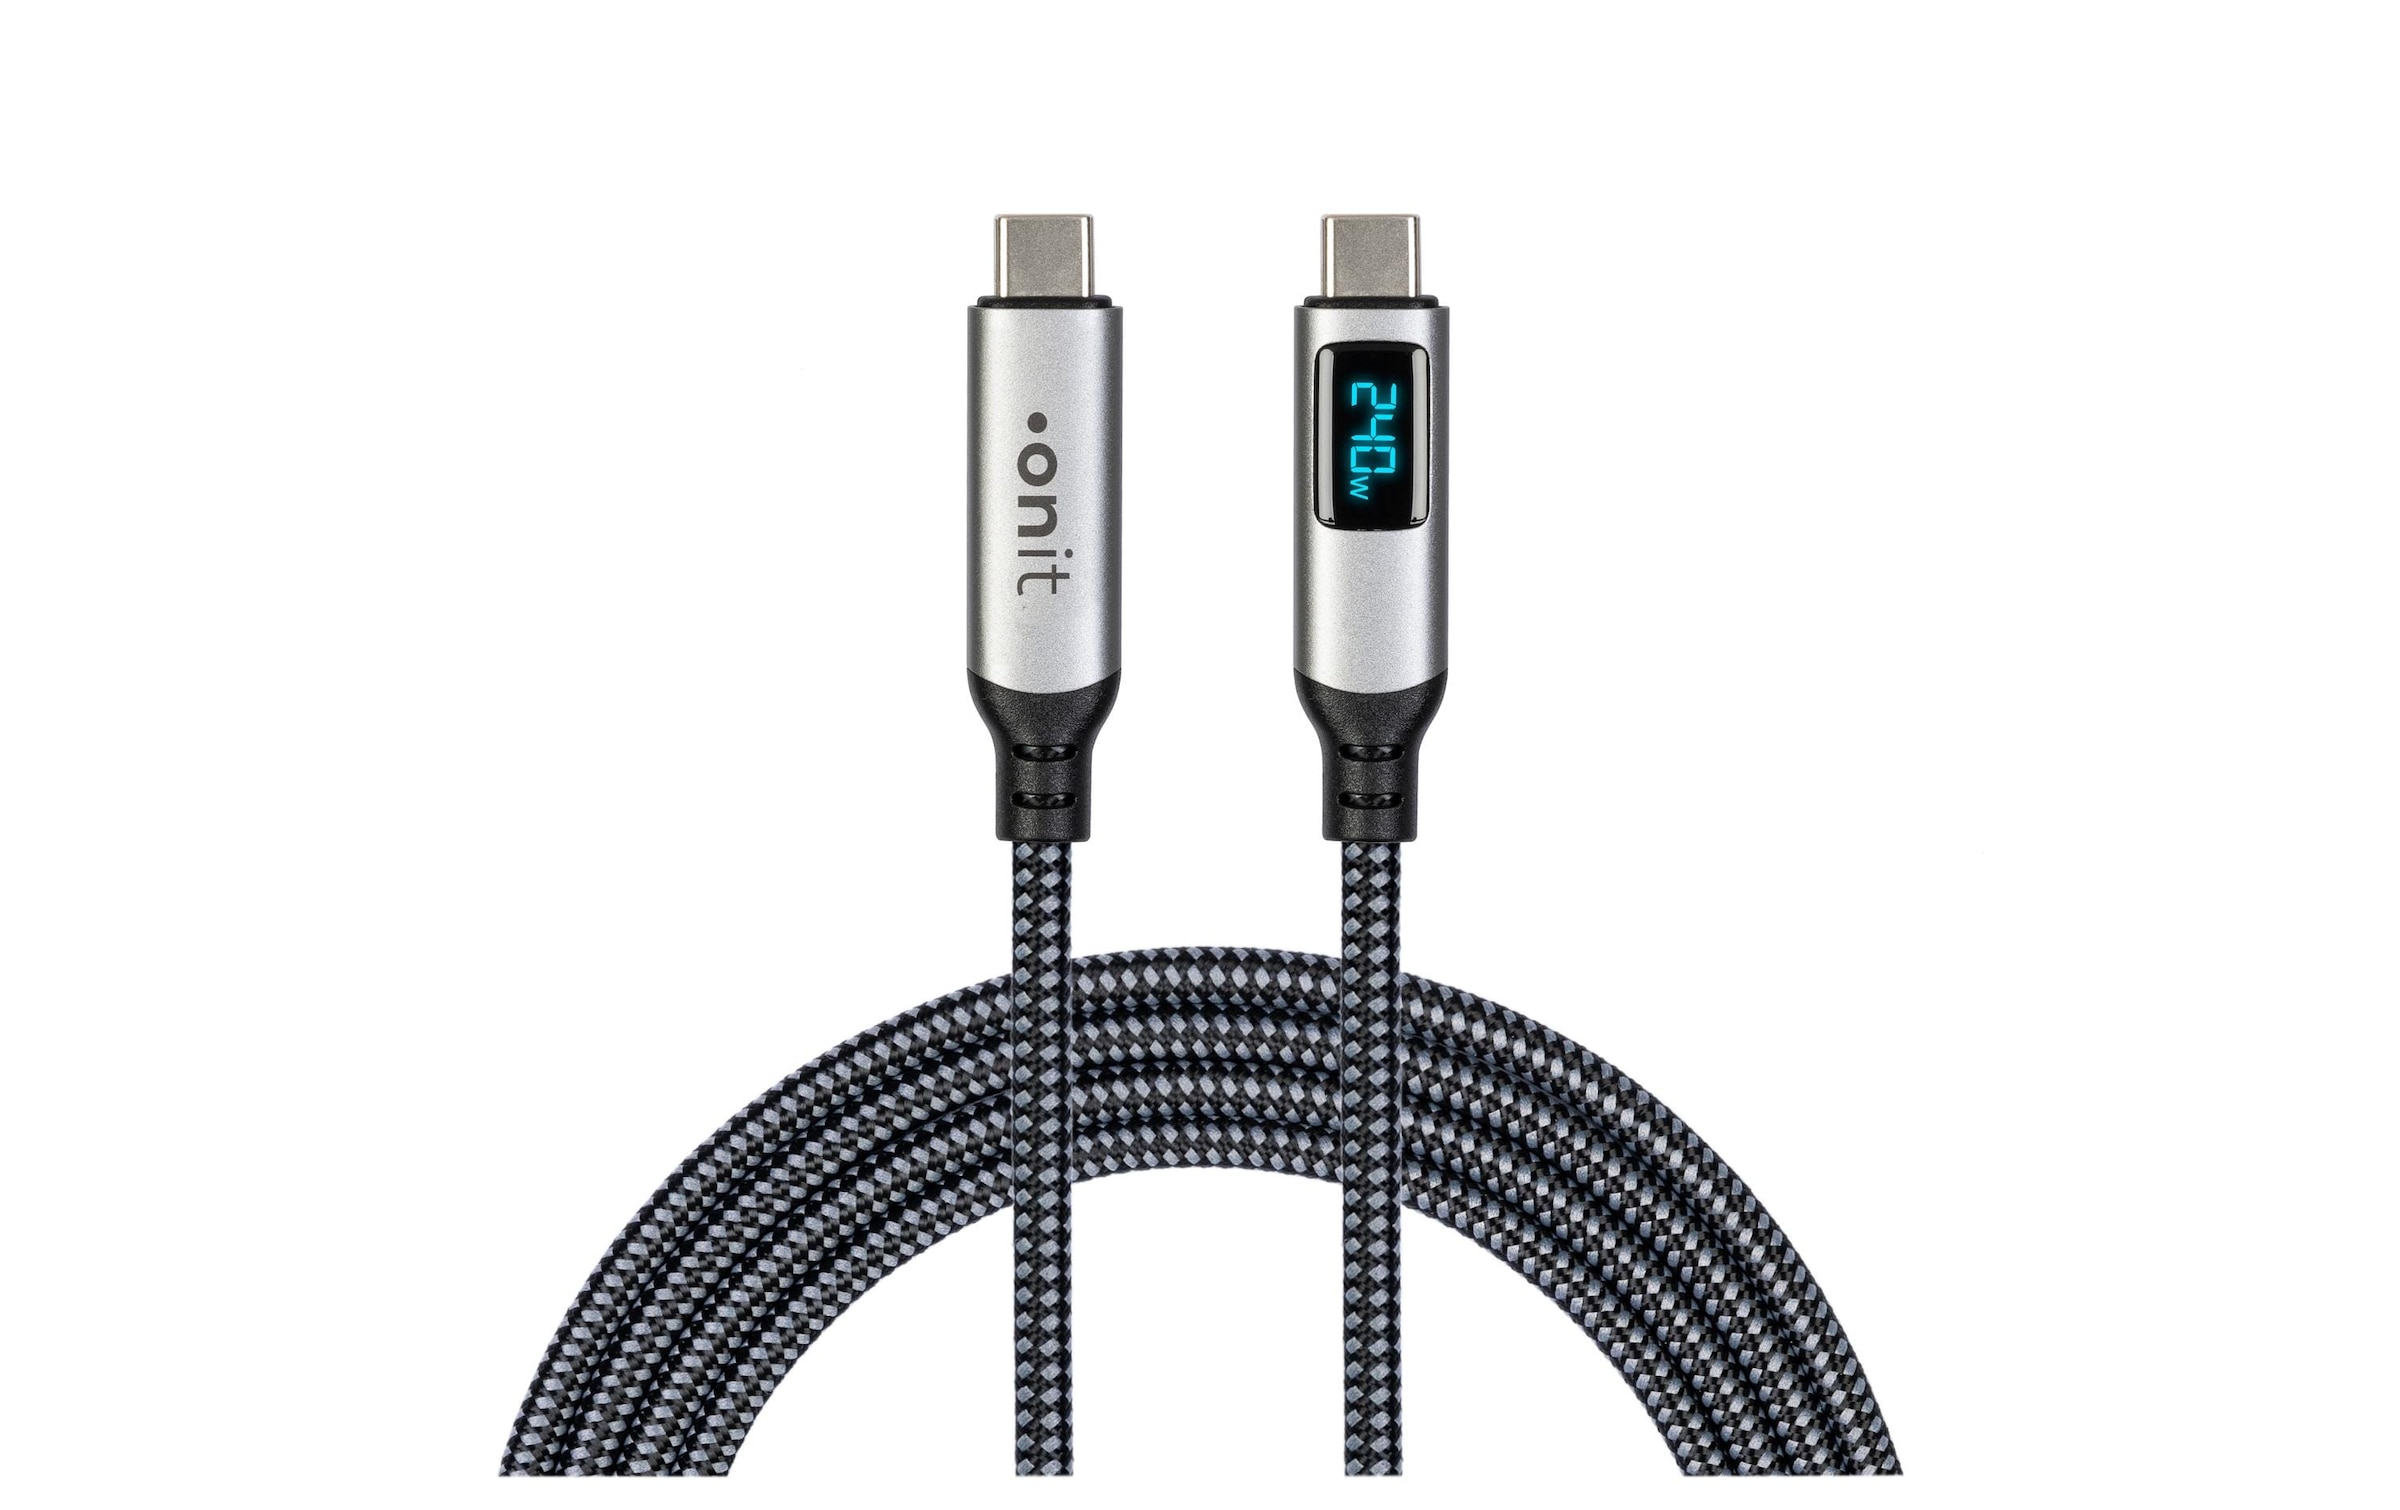 onit USB-Kabel »Premium LED USB C - USB C 1 m, Grau/Schwarz«